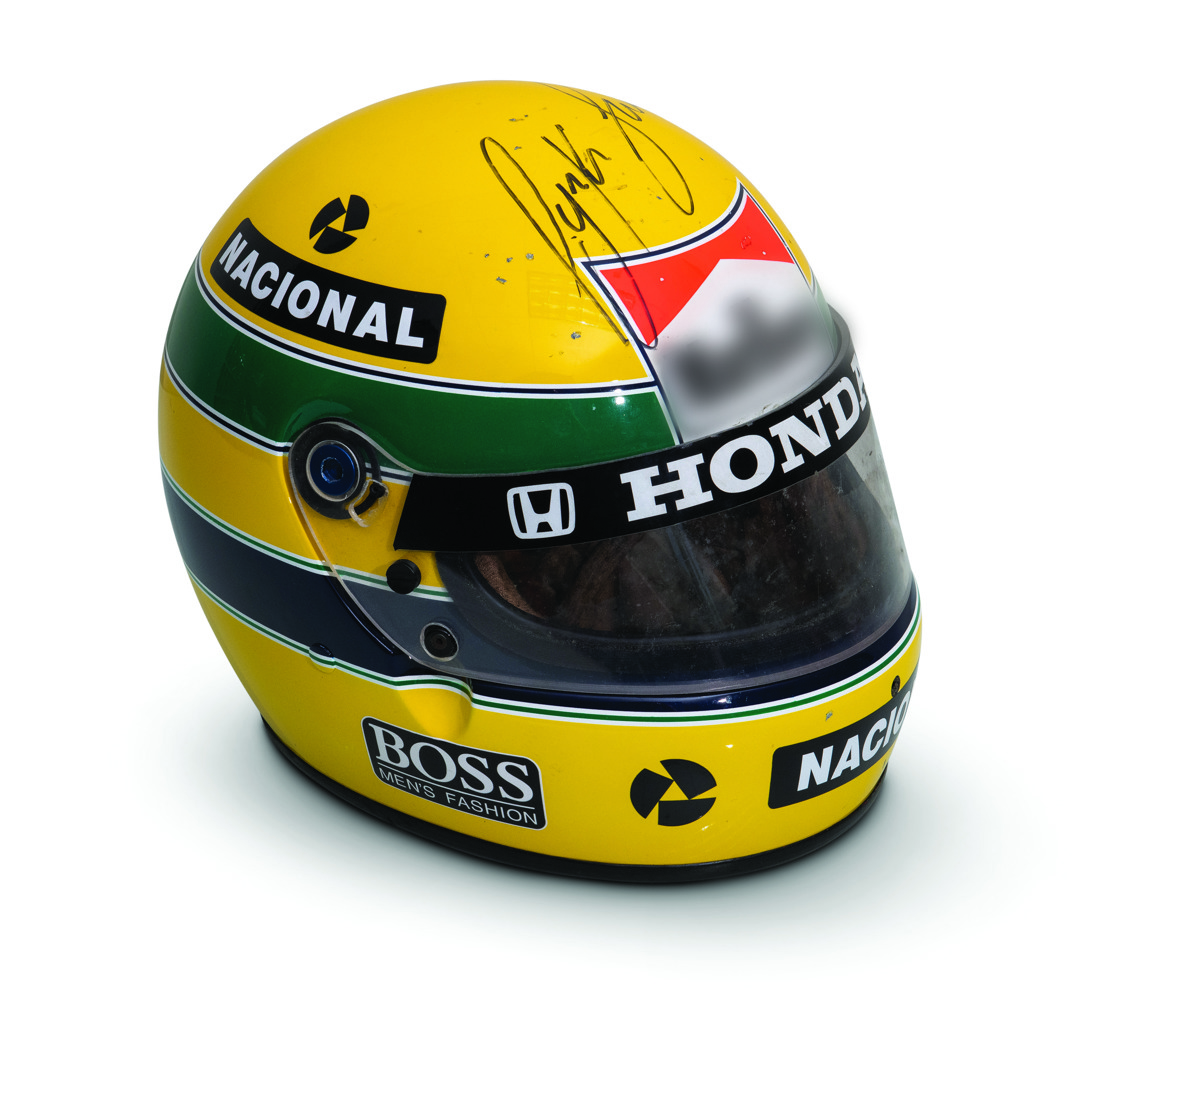 Ayrton Senna’s McLaren Honda Signed Helmet 1988 offered in RM Sotheby’s Formula 1 Memorabilia online auction 2019